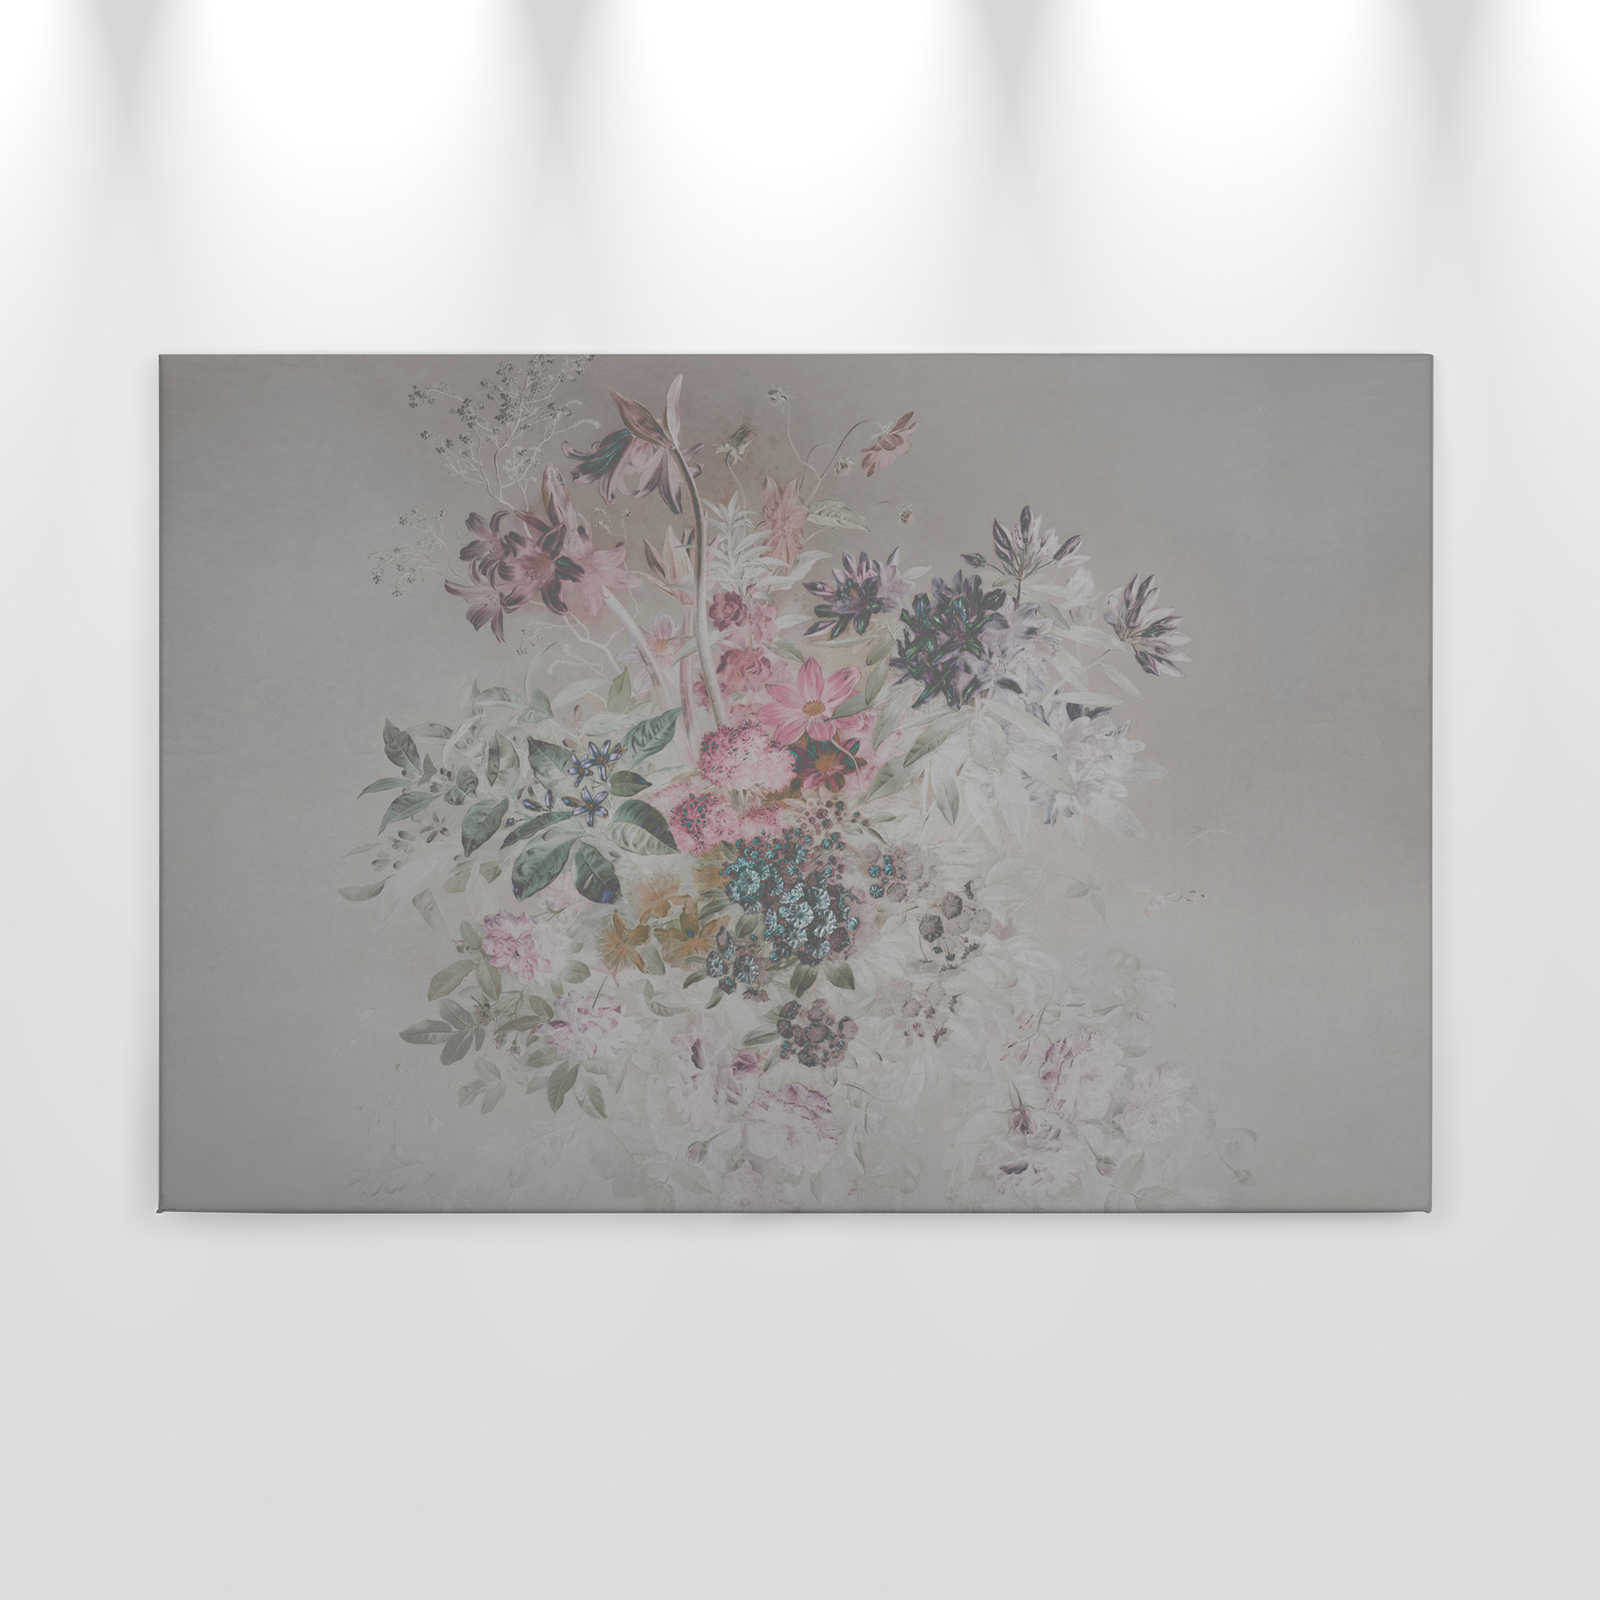             Blumen Leinwandbild mit Pastellfarben Design | rosa, grau – 0,90 m x 0,60 m
        